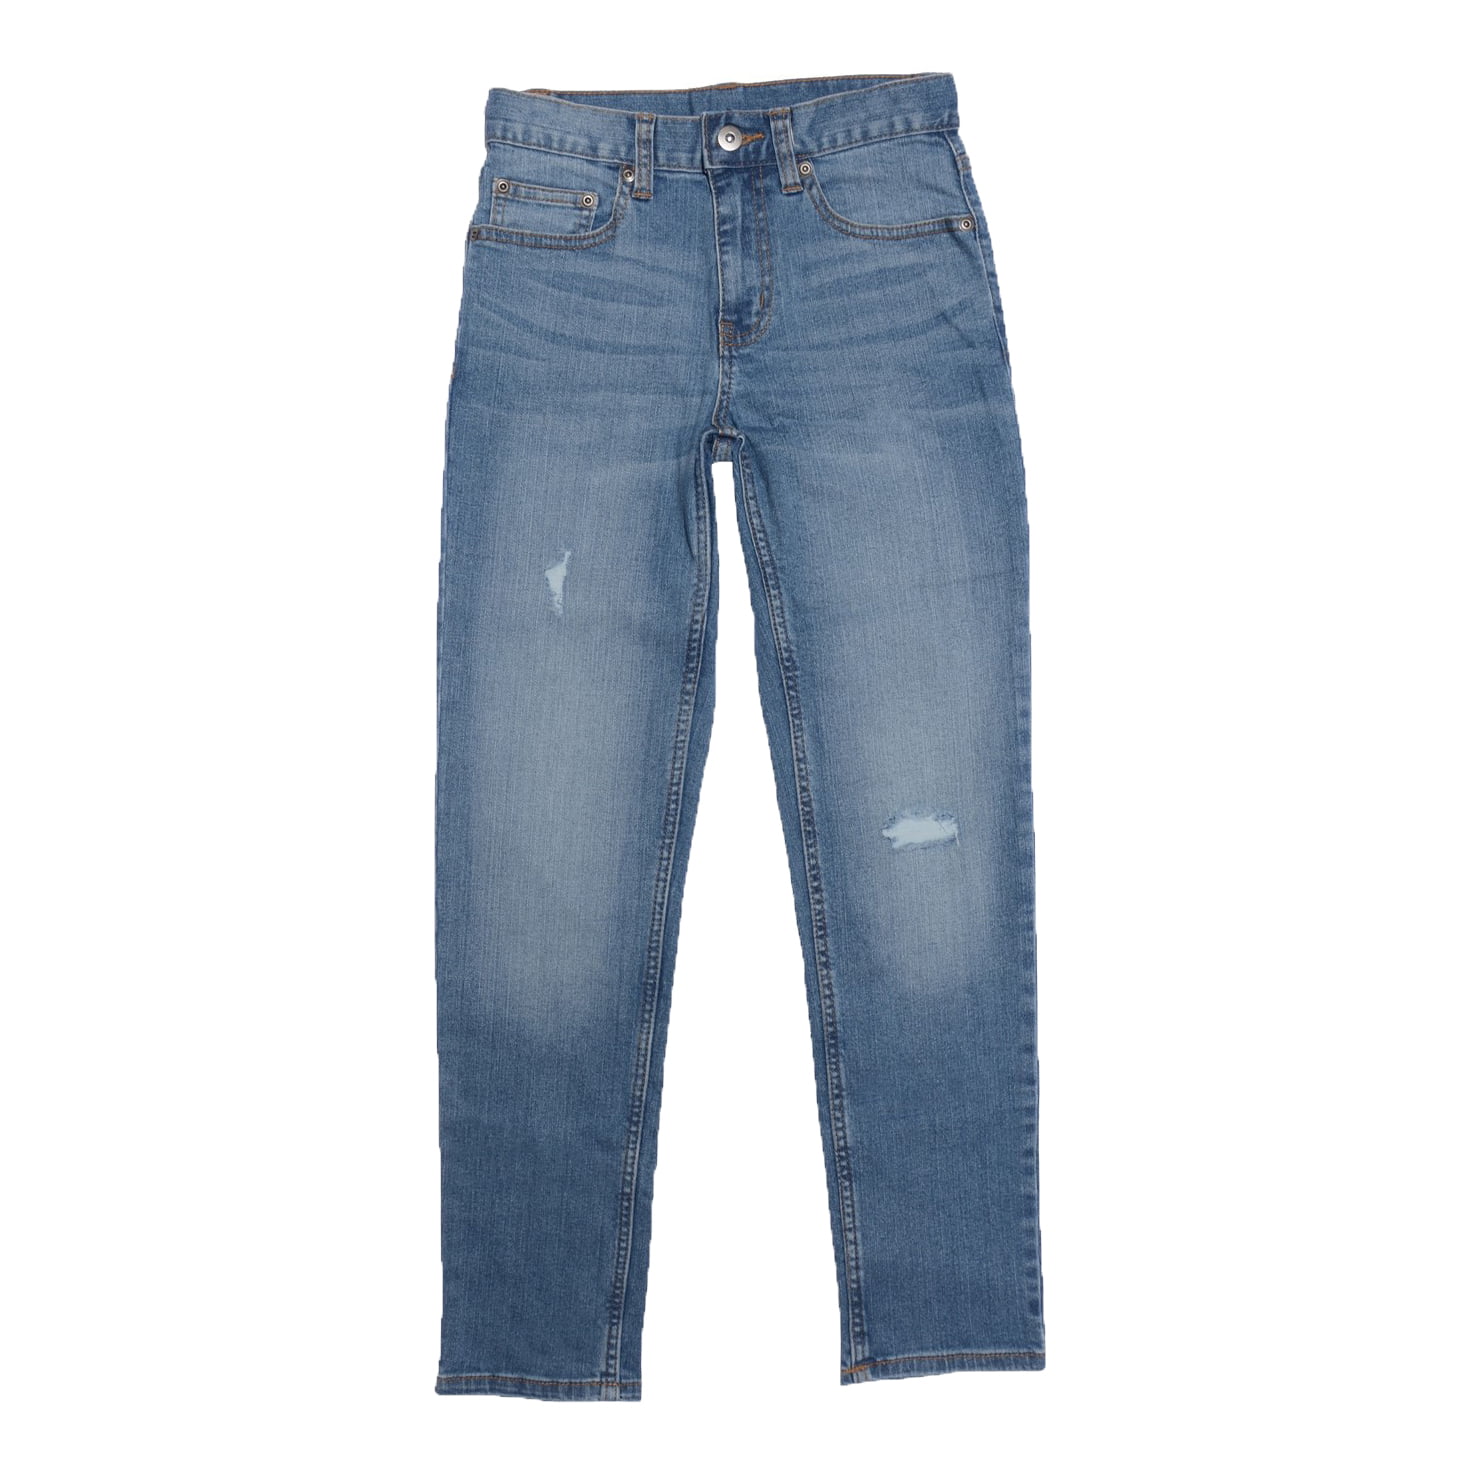 Faded Glory Boy's Skinny Jeans with Destruction - Walmart.com